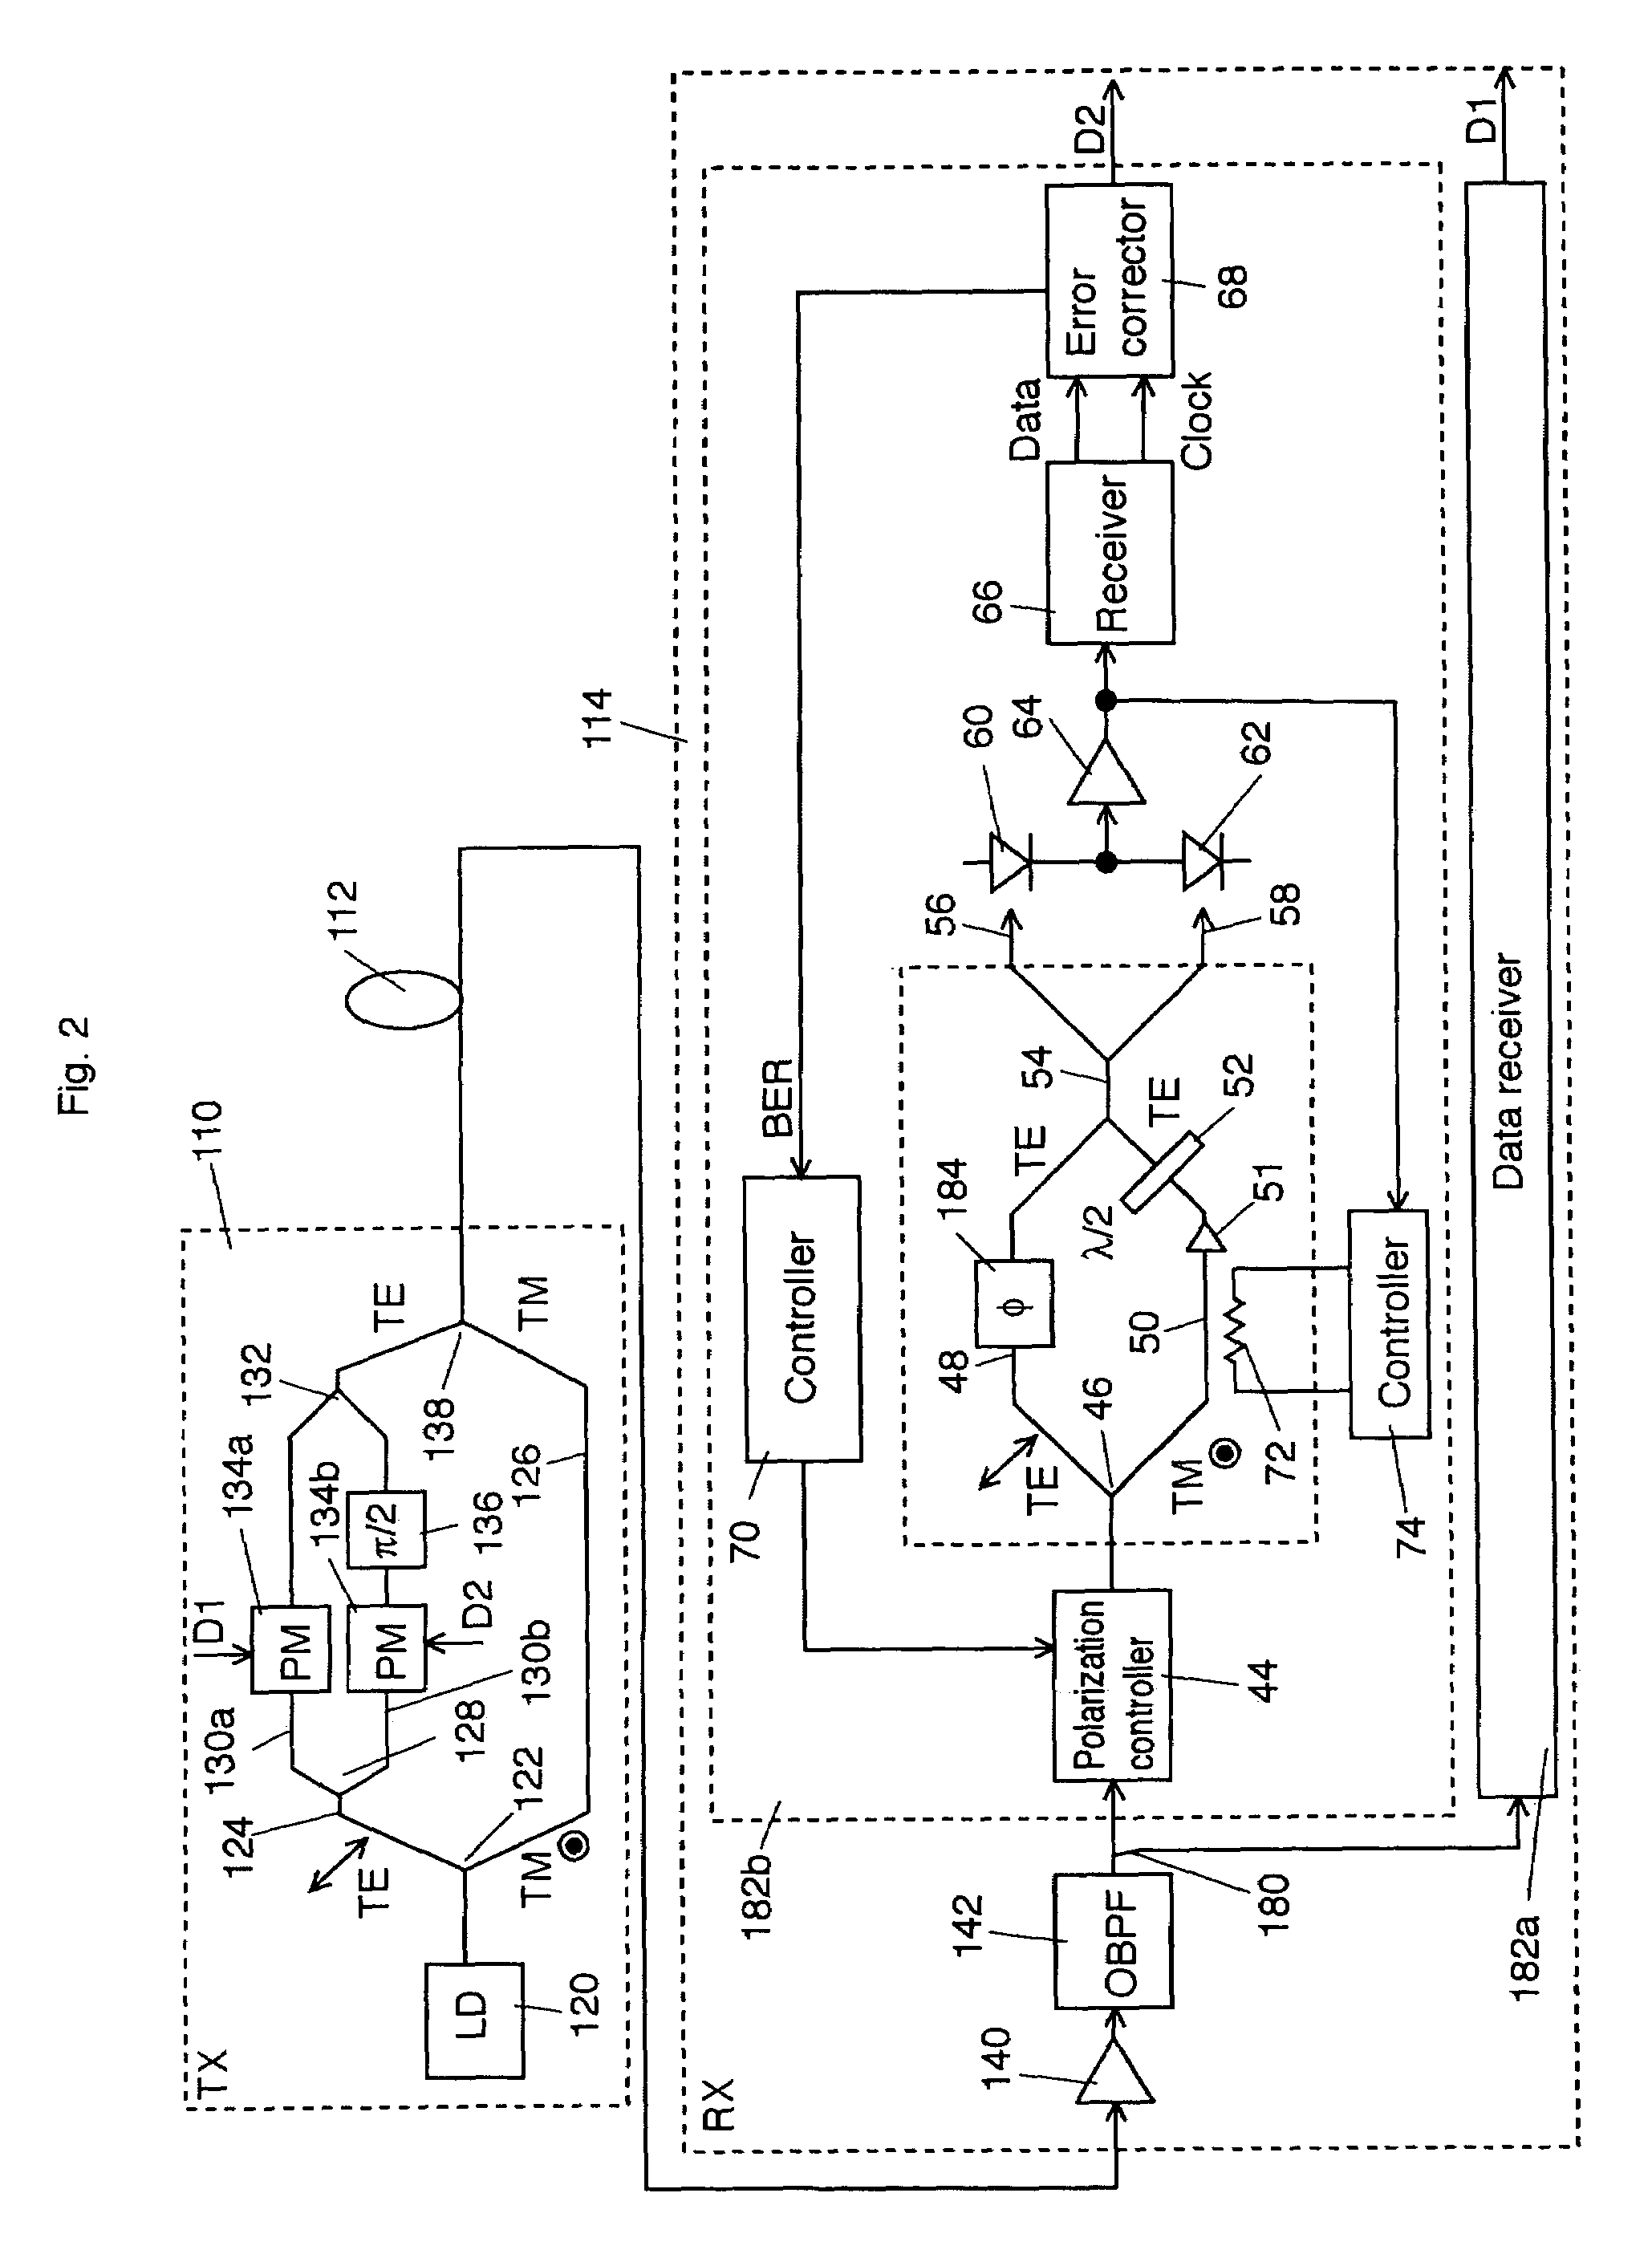 Optical transmission method and system